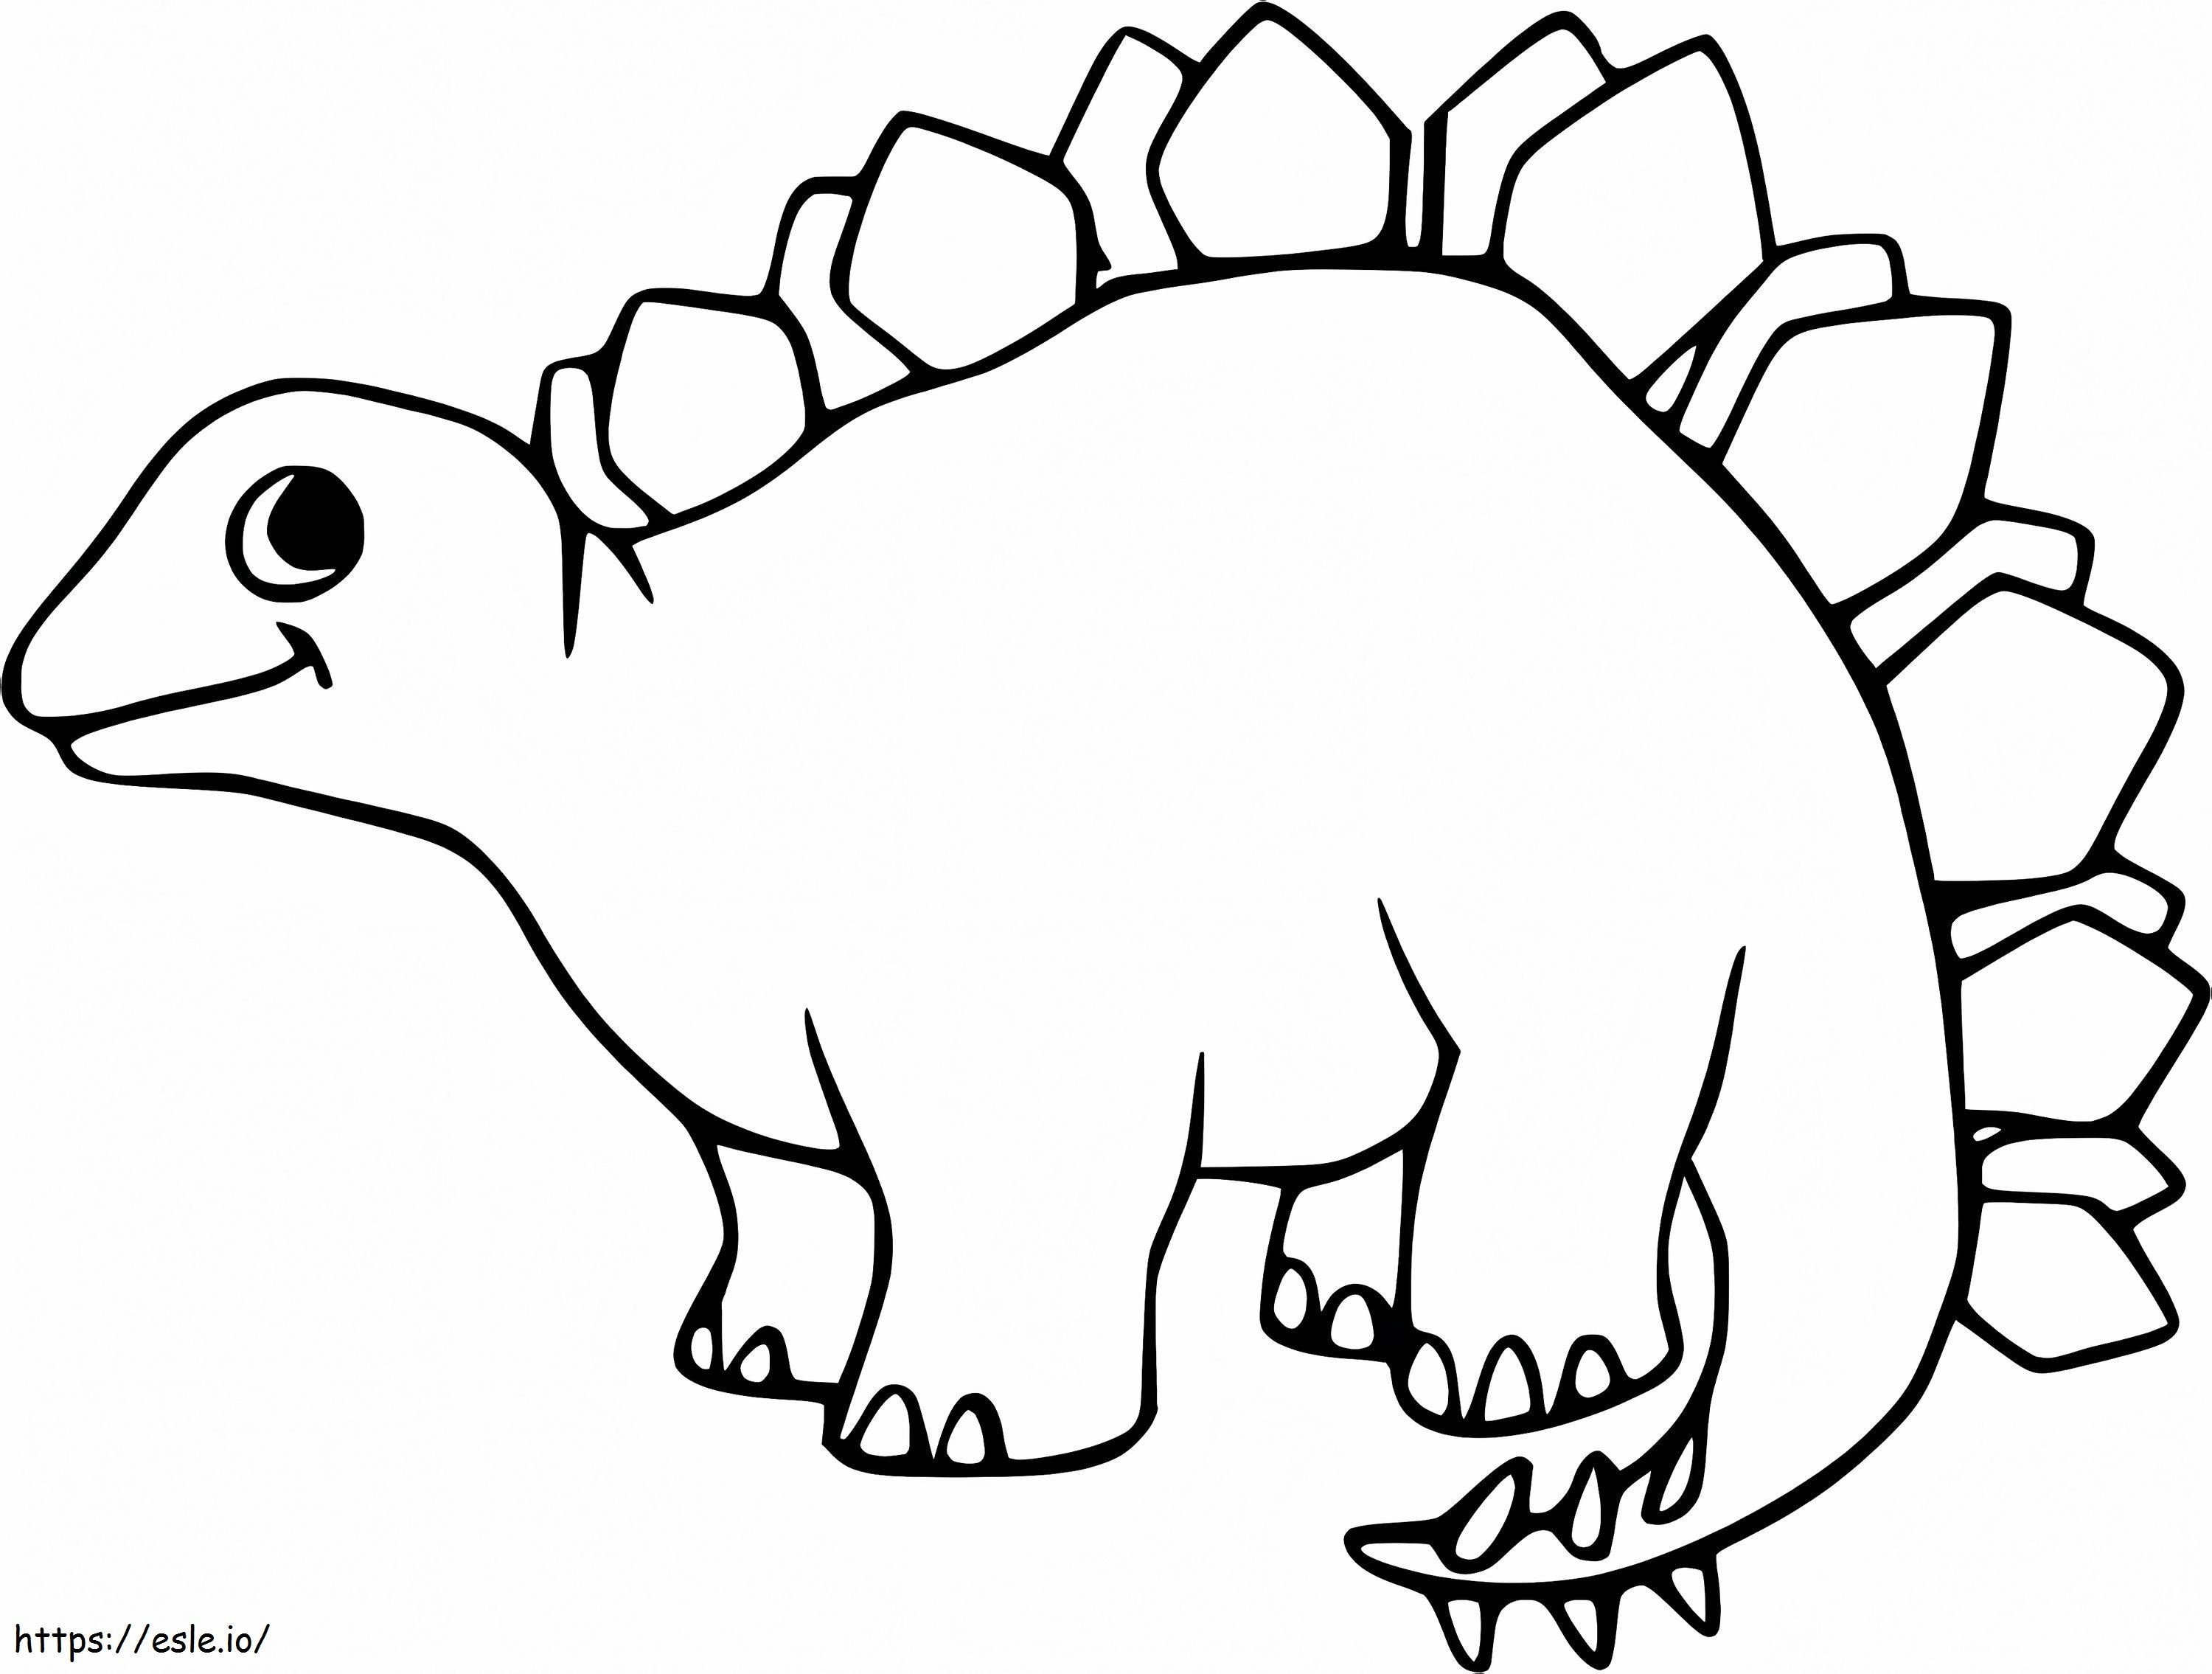 Adorable Stegosaurus coloring page